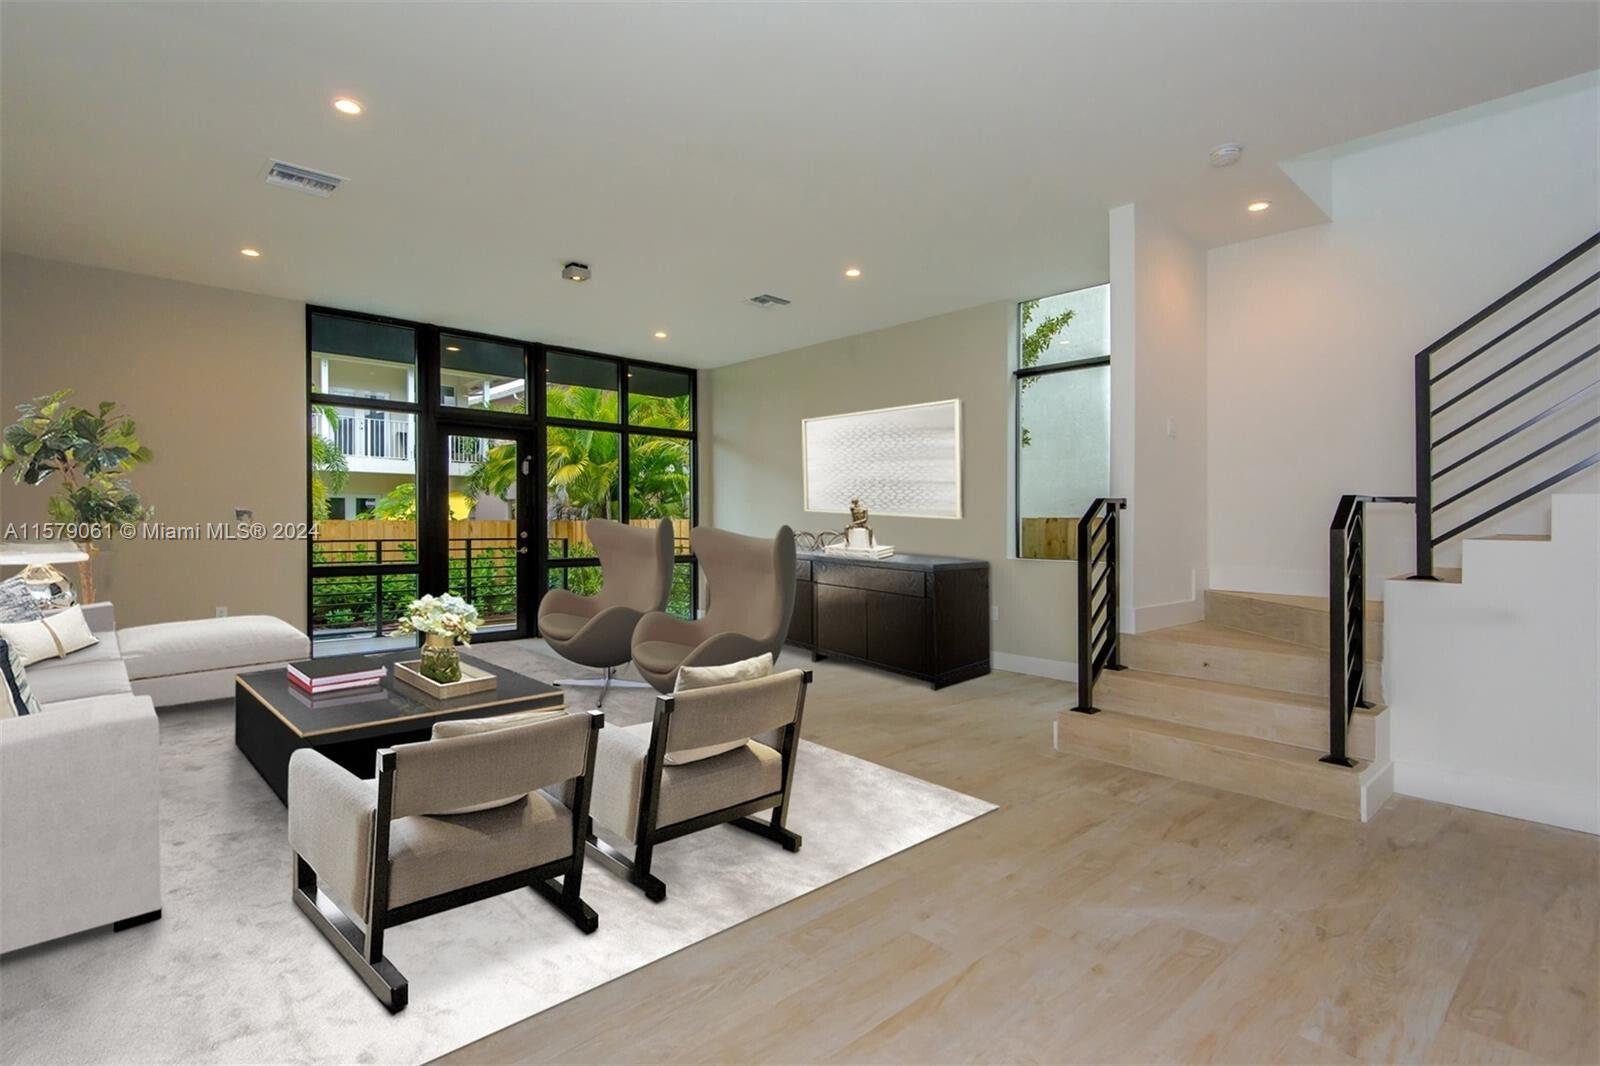 Rental Property at 3150 New York St St 3150, Miami, Broward County, Florida - Bedrooms: 3 
Bathrooms: 4  - $7,750 MO.